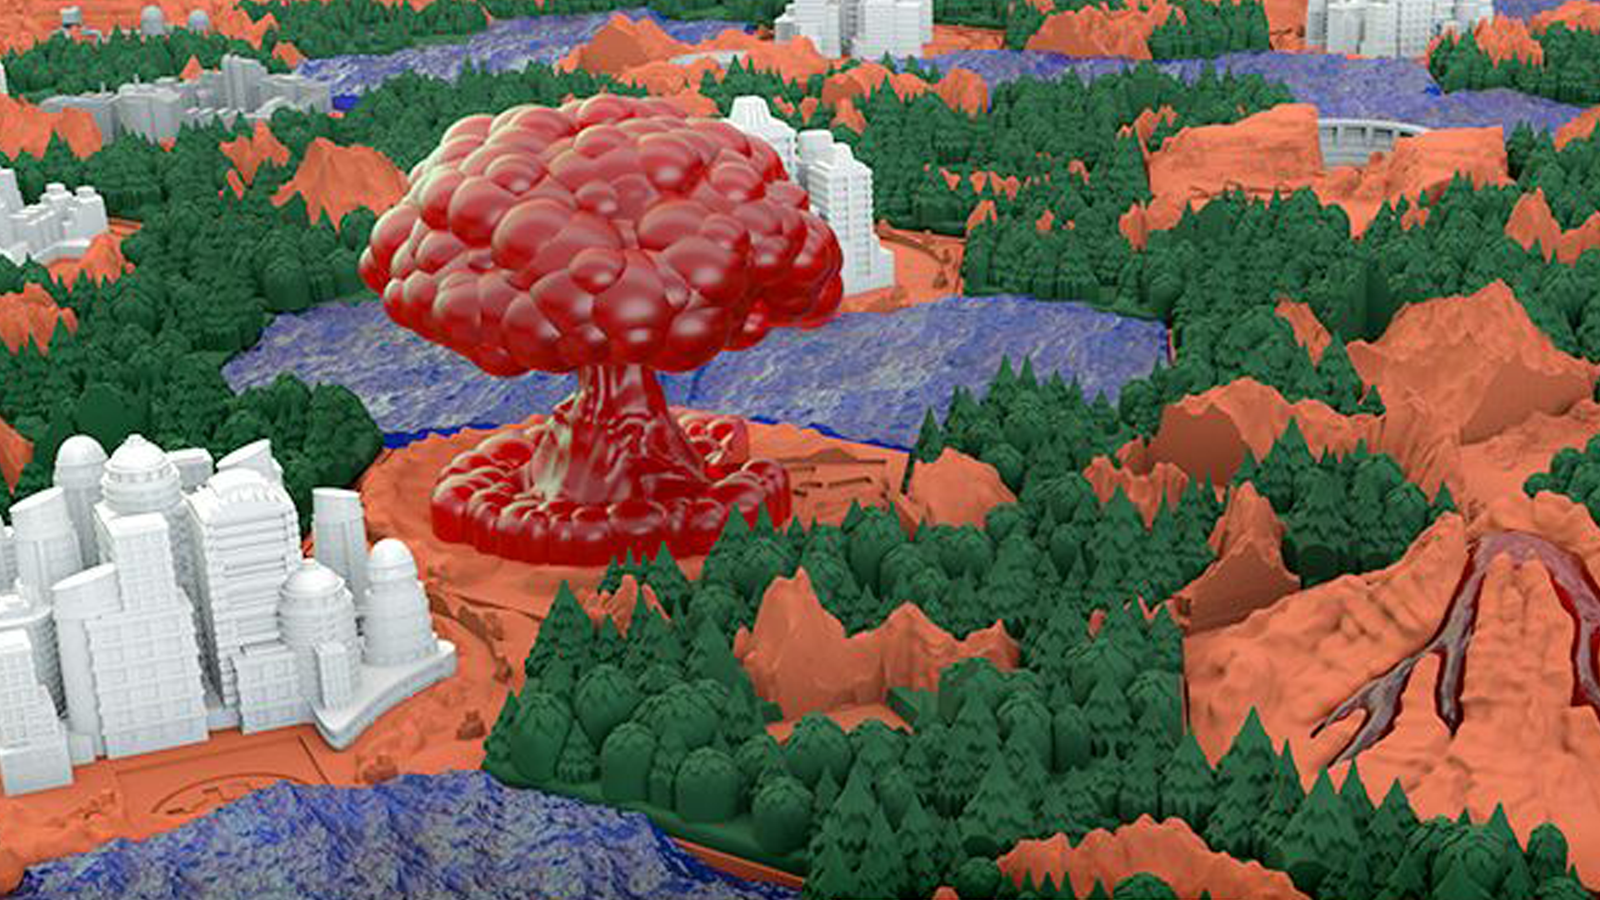 Terraforming Mars' Big Box expansion brings 3D terrain to the